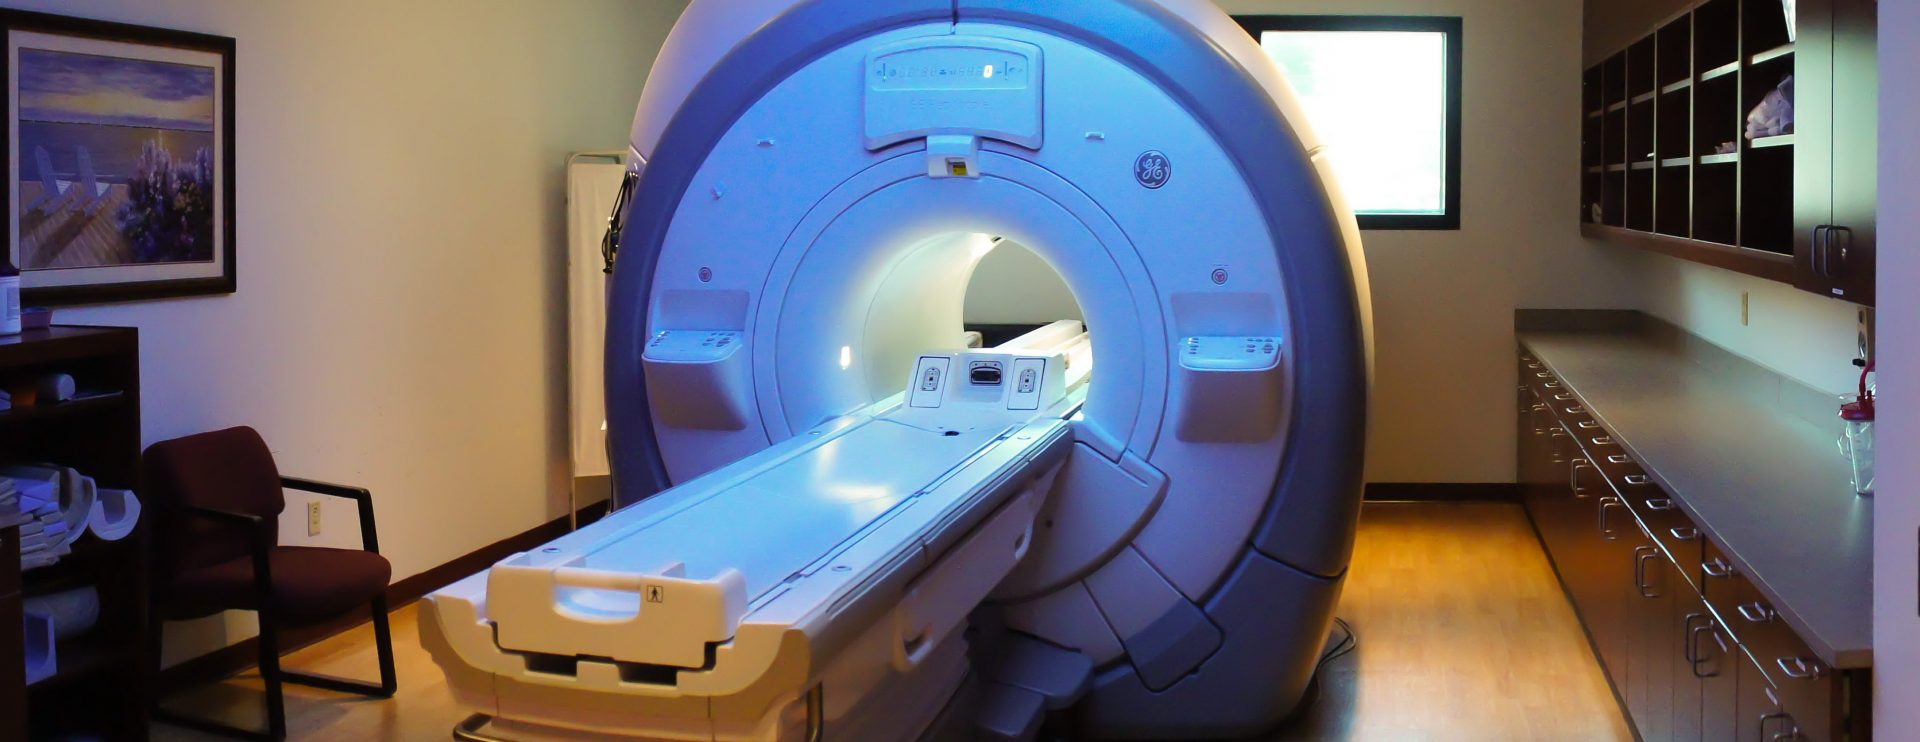 Cardiac MRI Video